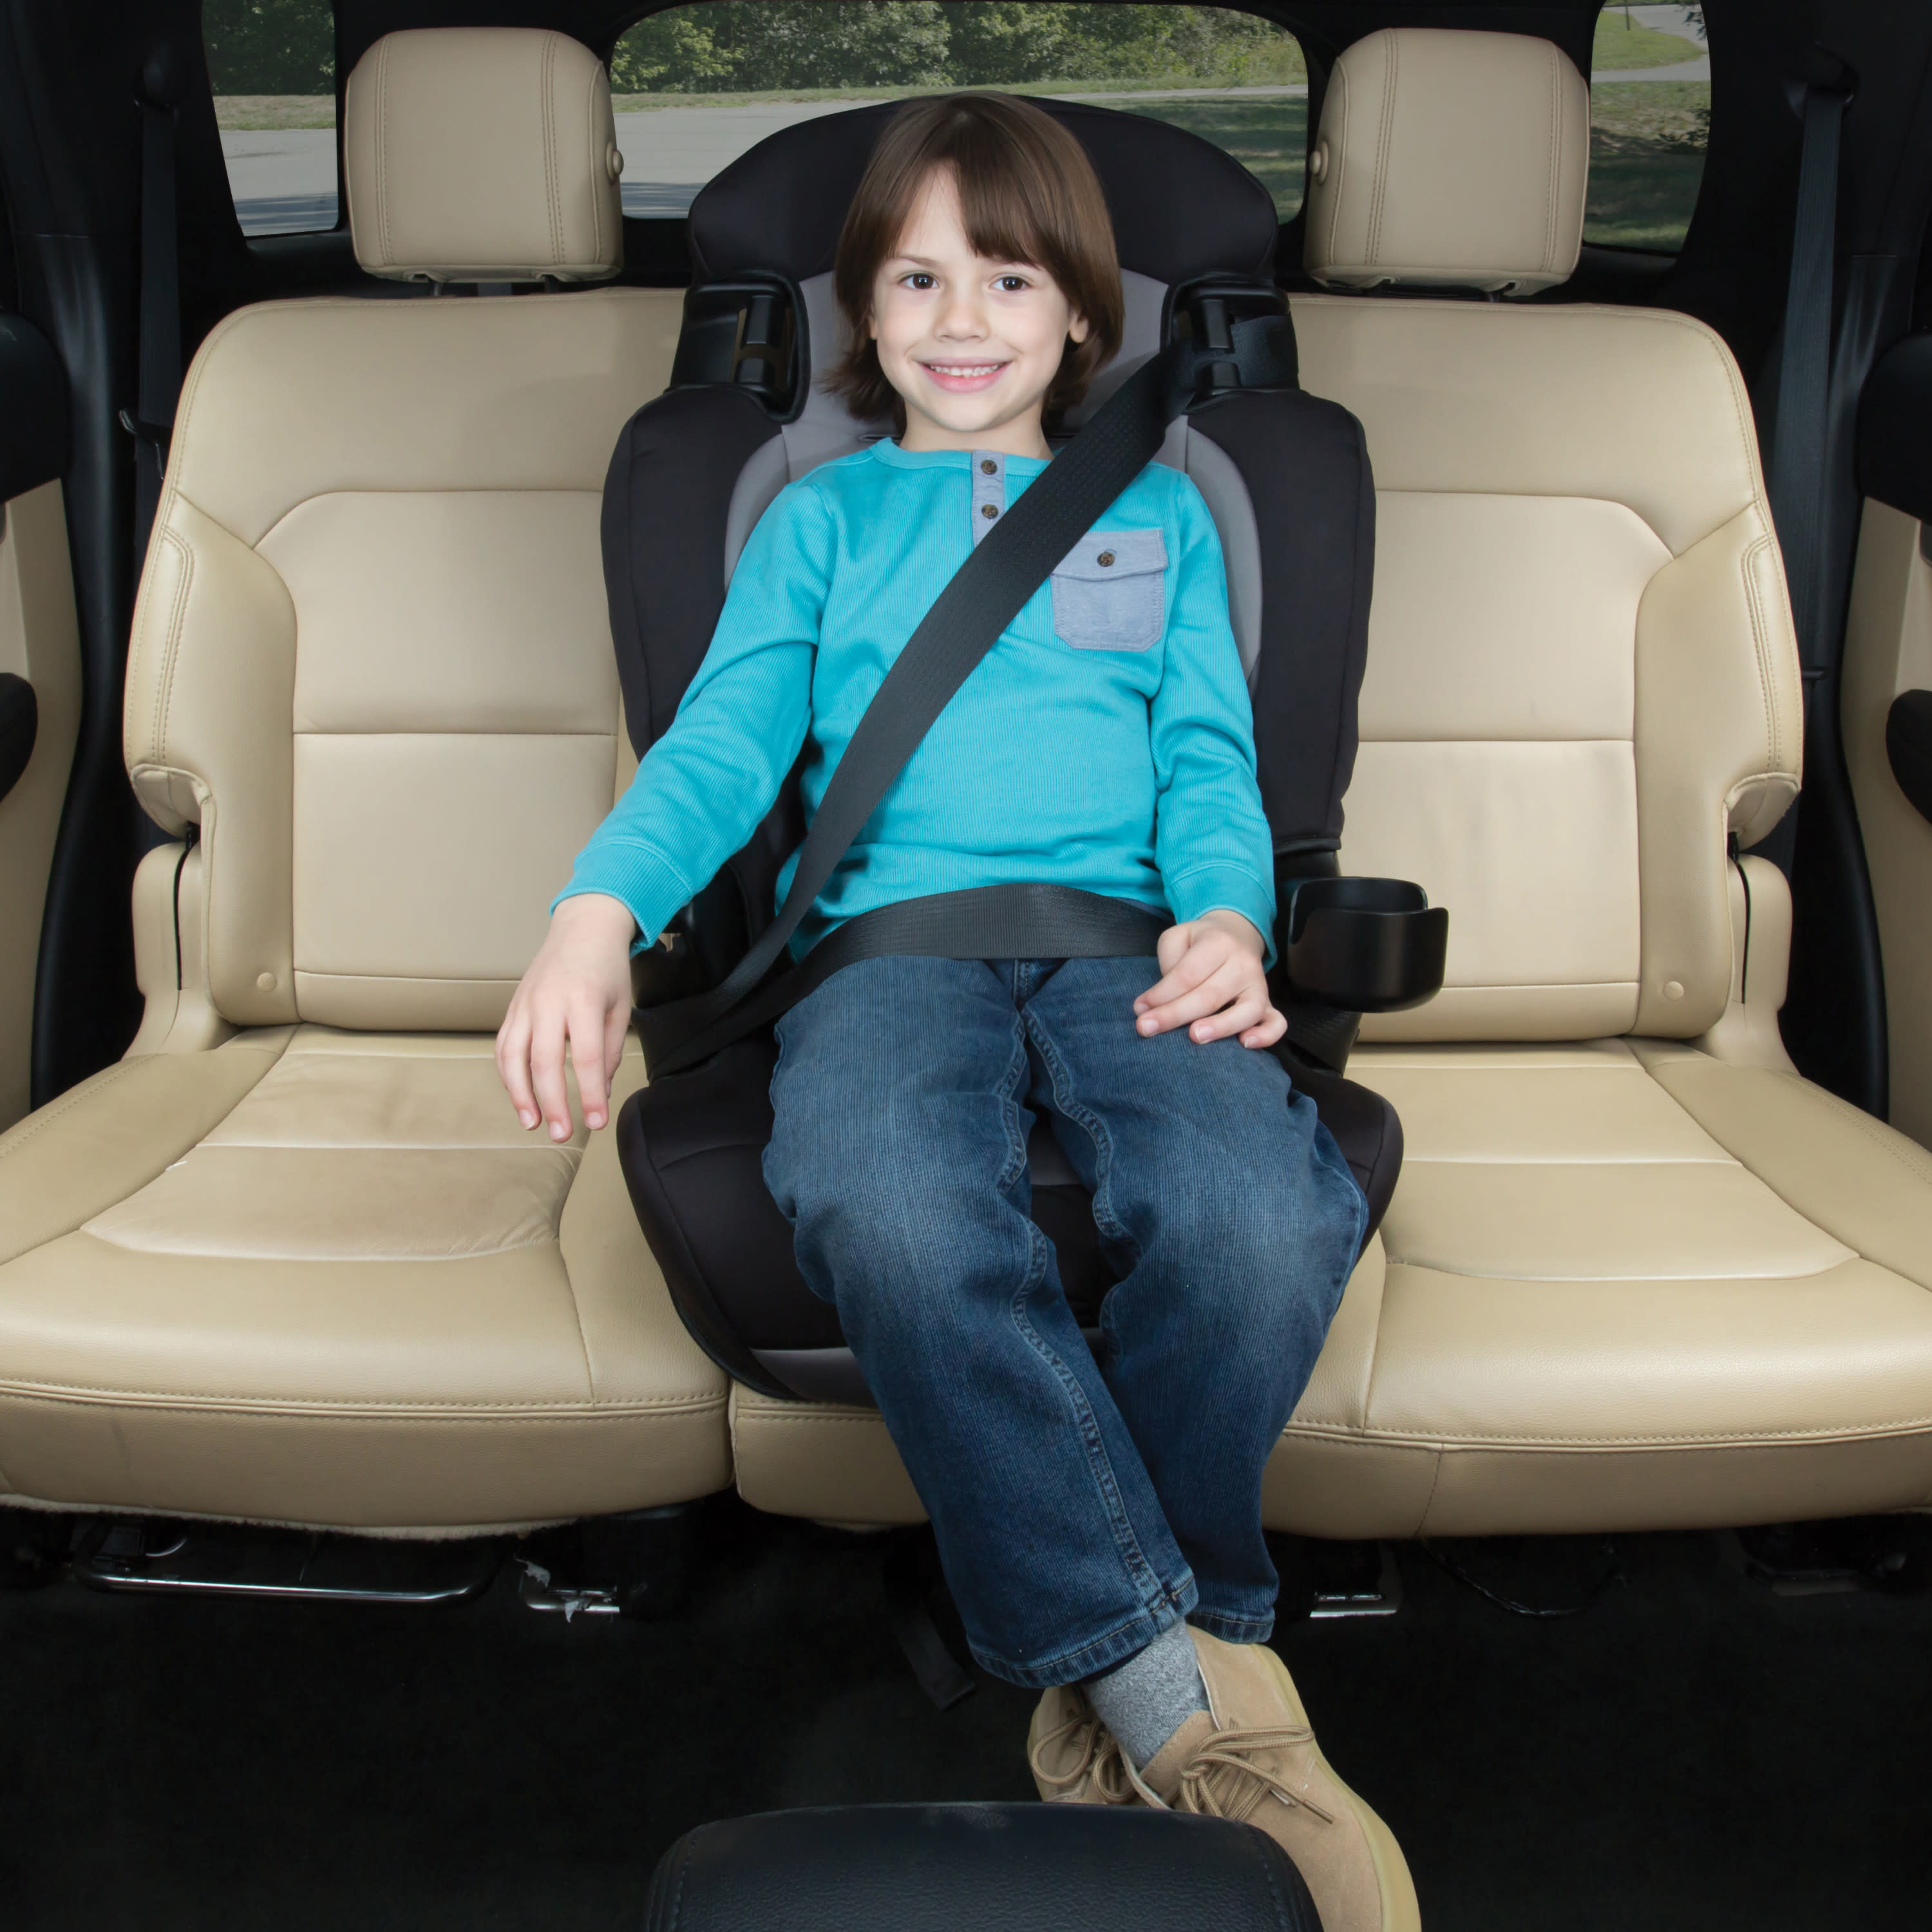 Cosco Kids Finale 2-in-1 Booster Car Seat, Fiberwave - image 4 of 16